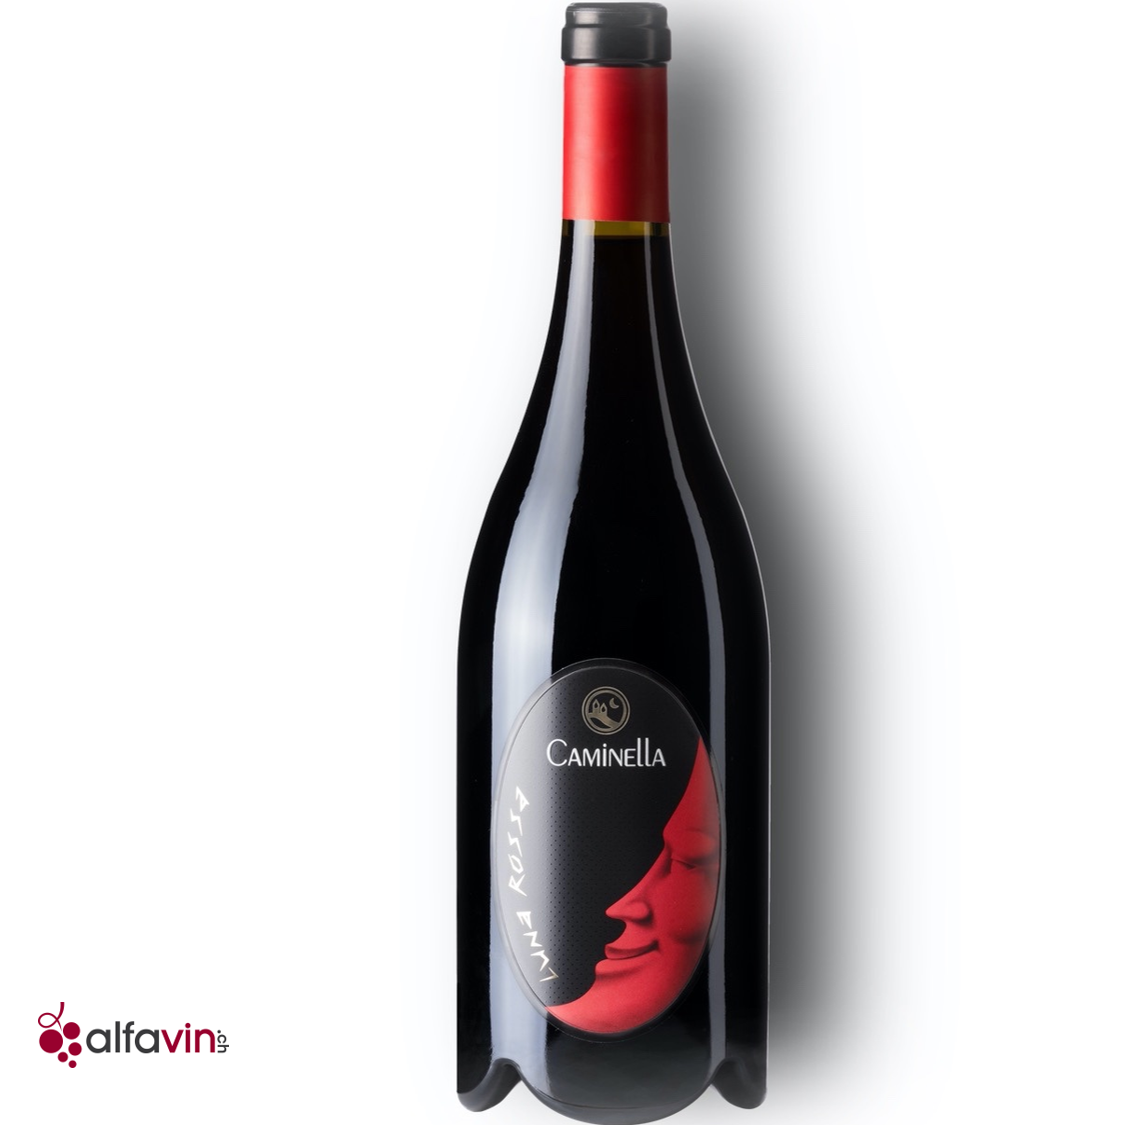 Luna Rossa 2019, Caminella, vin rouge italien de Lombardie